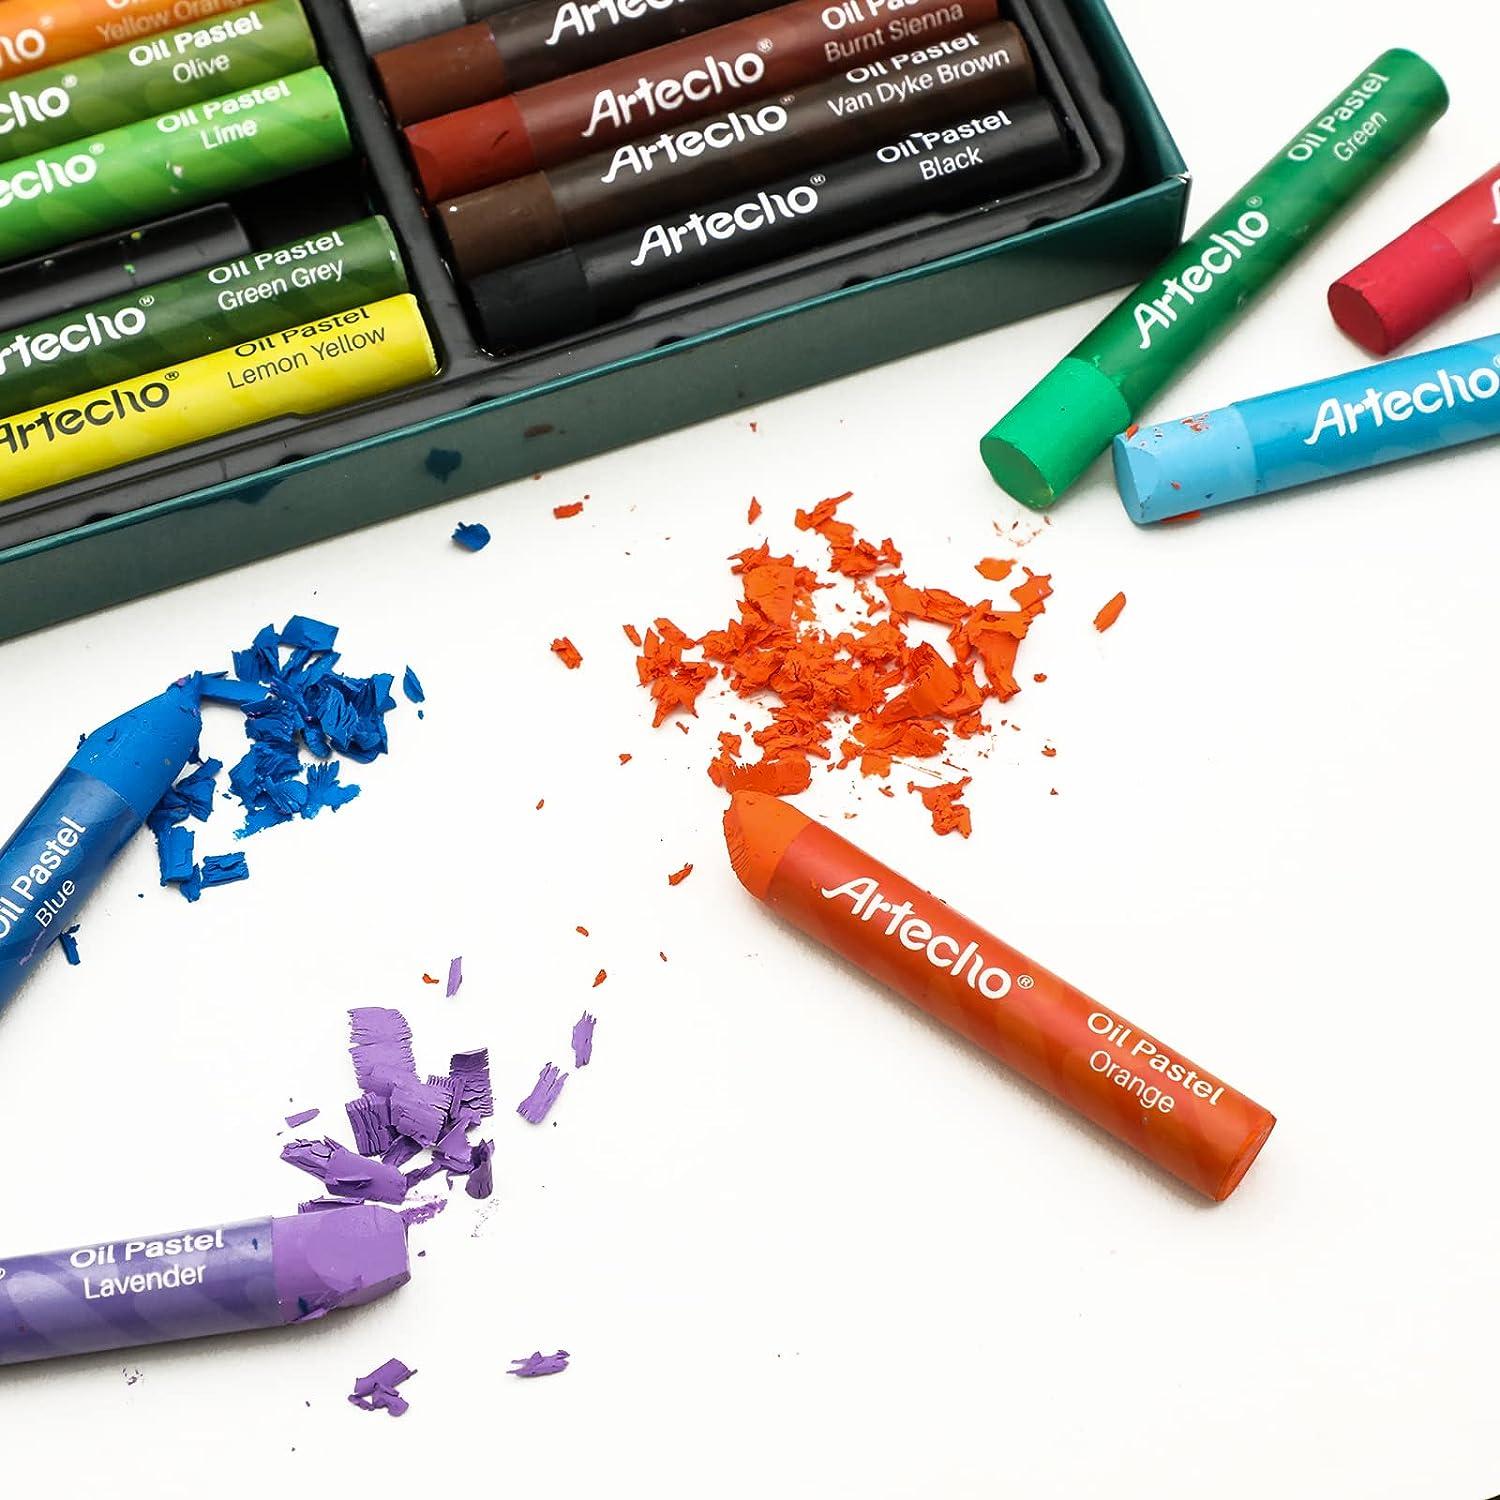 Pastels Art Supplies, Blue Bright Colors High Oil Pastels Set 18 Pcs  Ultrasoft For School For Artists 